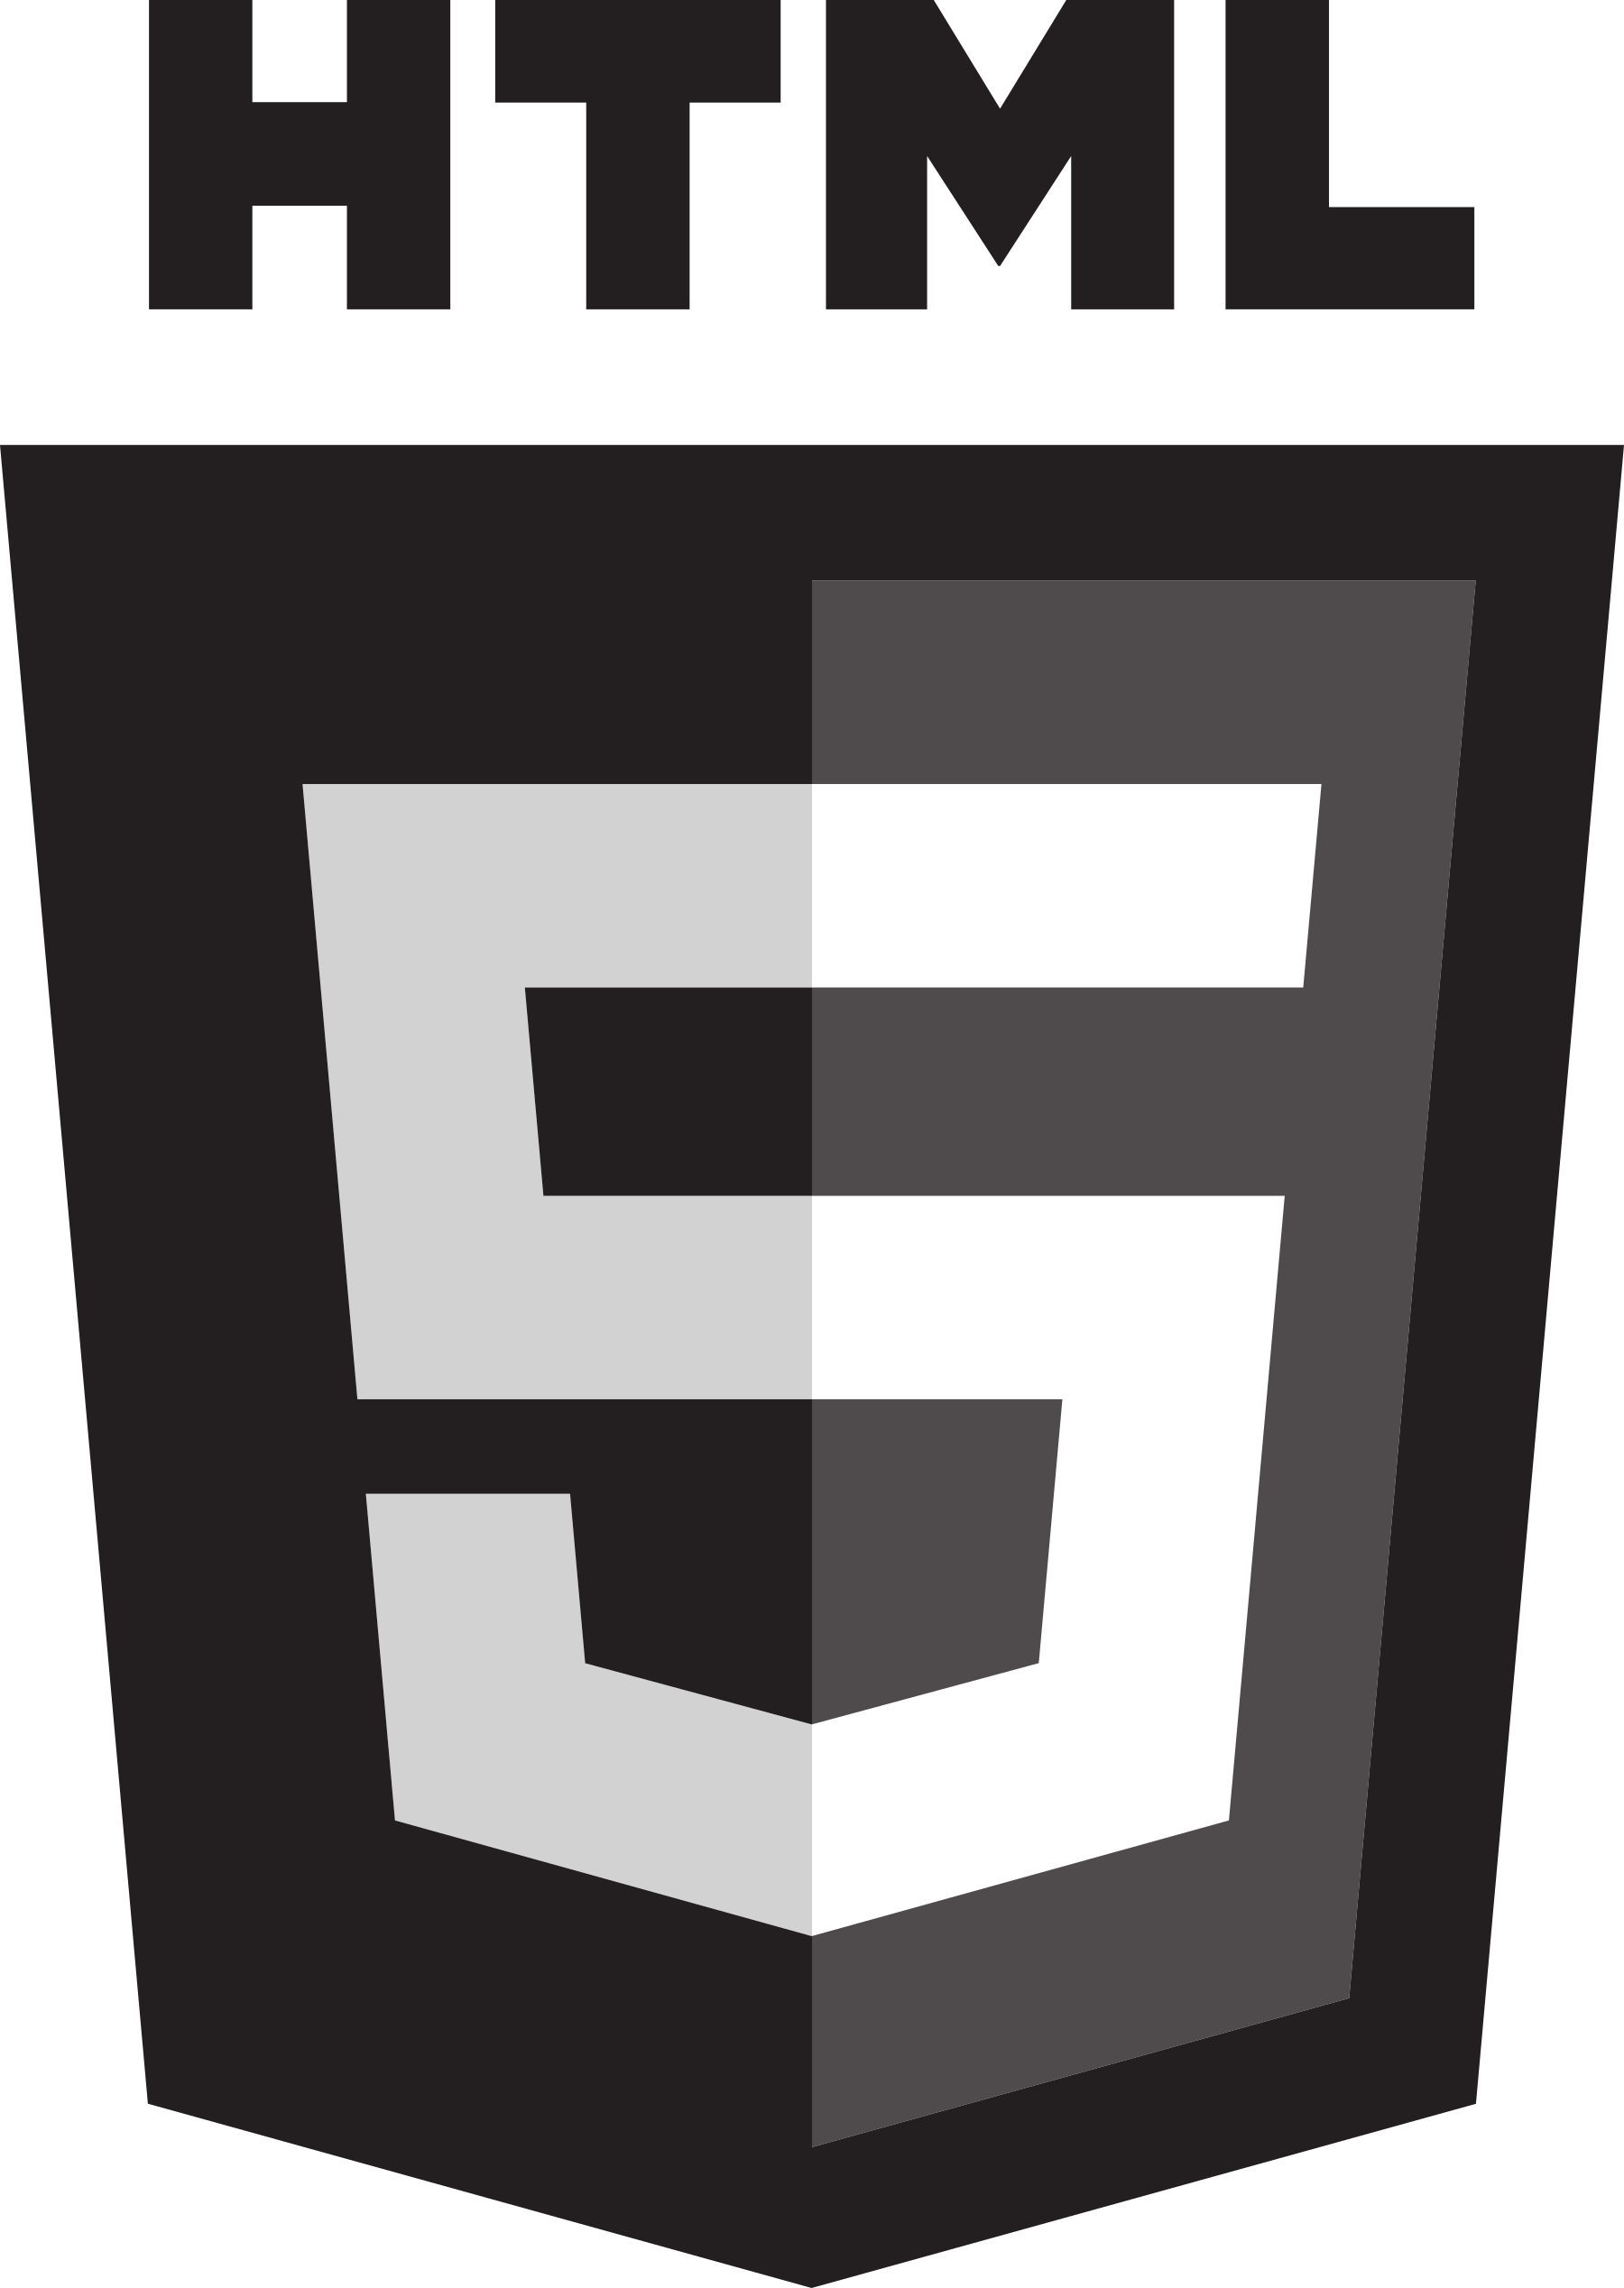 HTML 5 Logo.